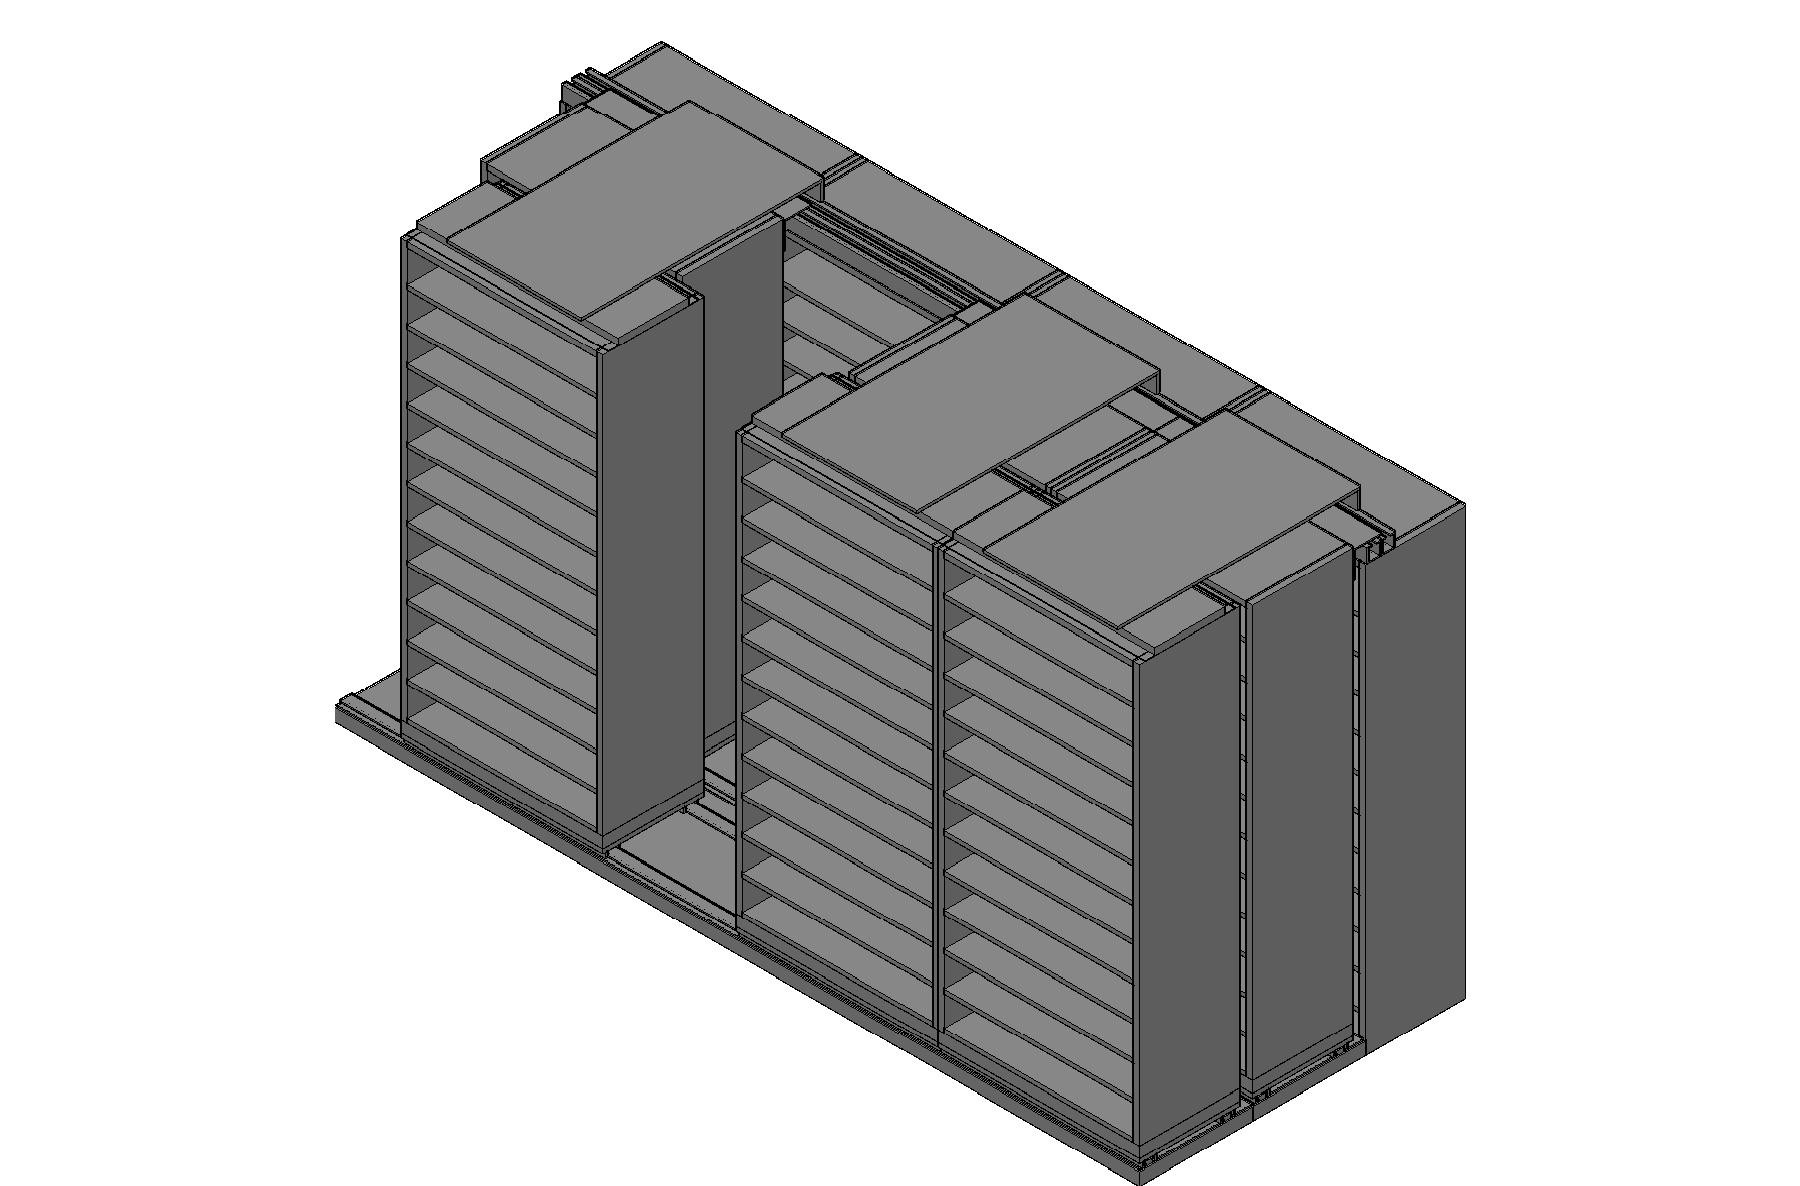 Bin Size Sliding Shelves - 3 Rows Deep - 12 Levels - (36" x 18" Shelves) - 148" Total Width